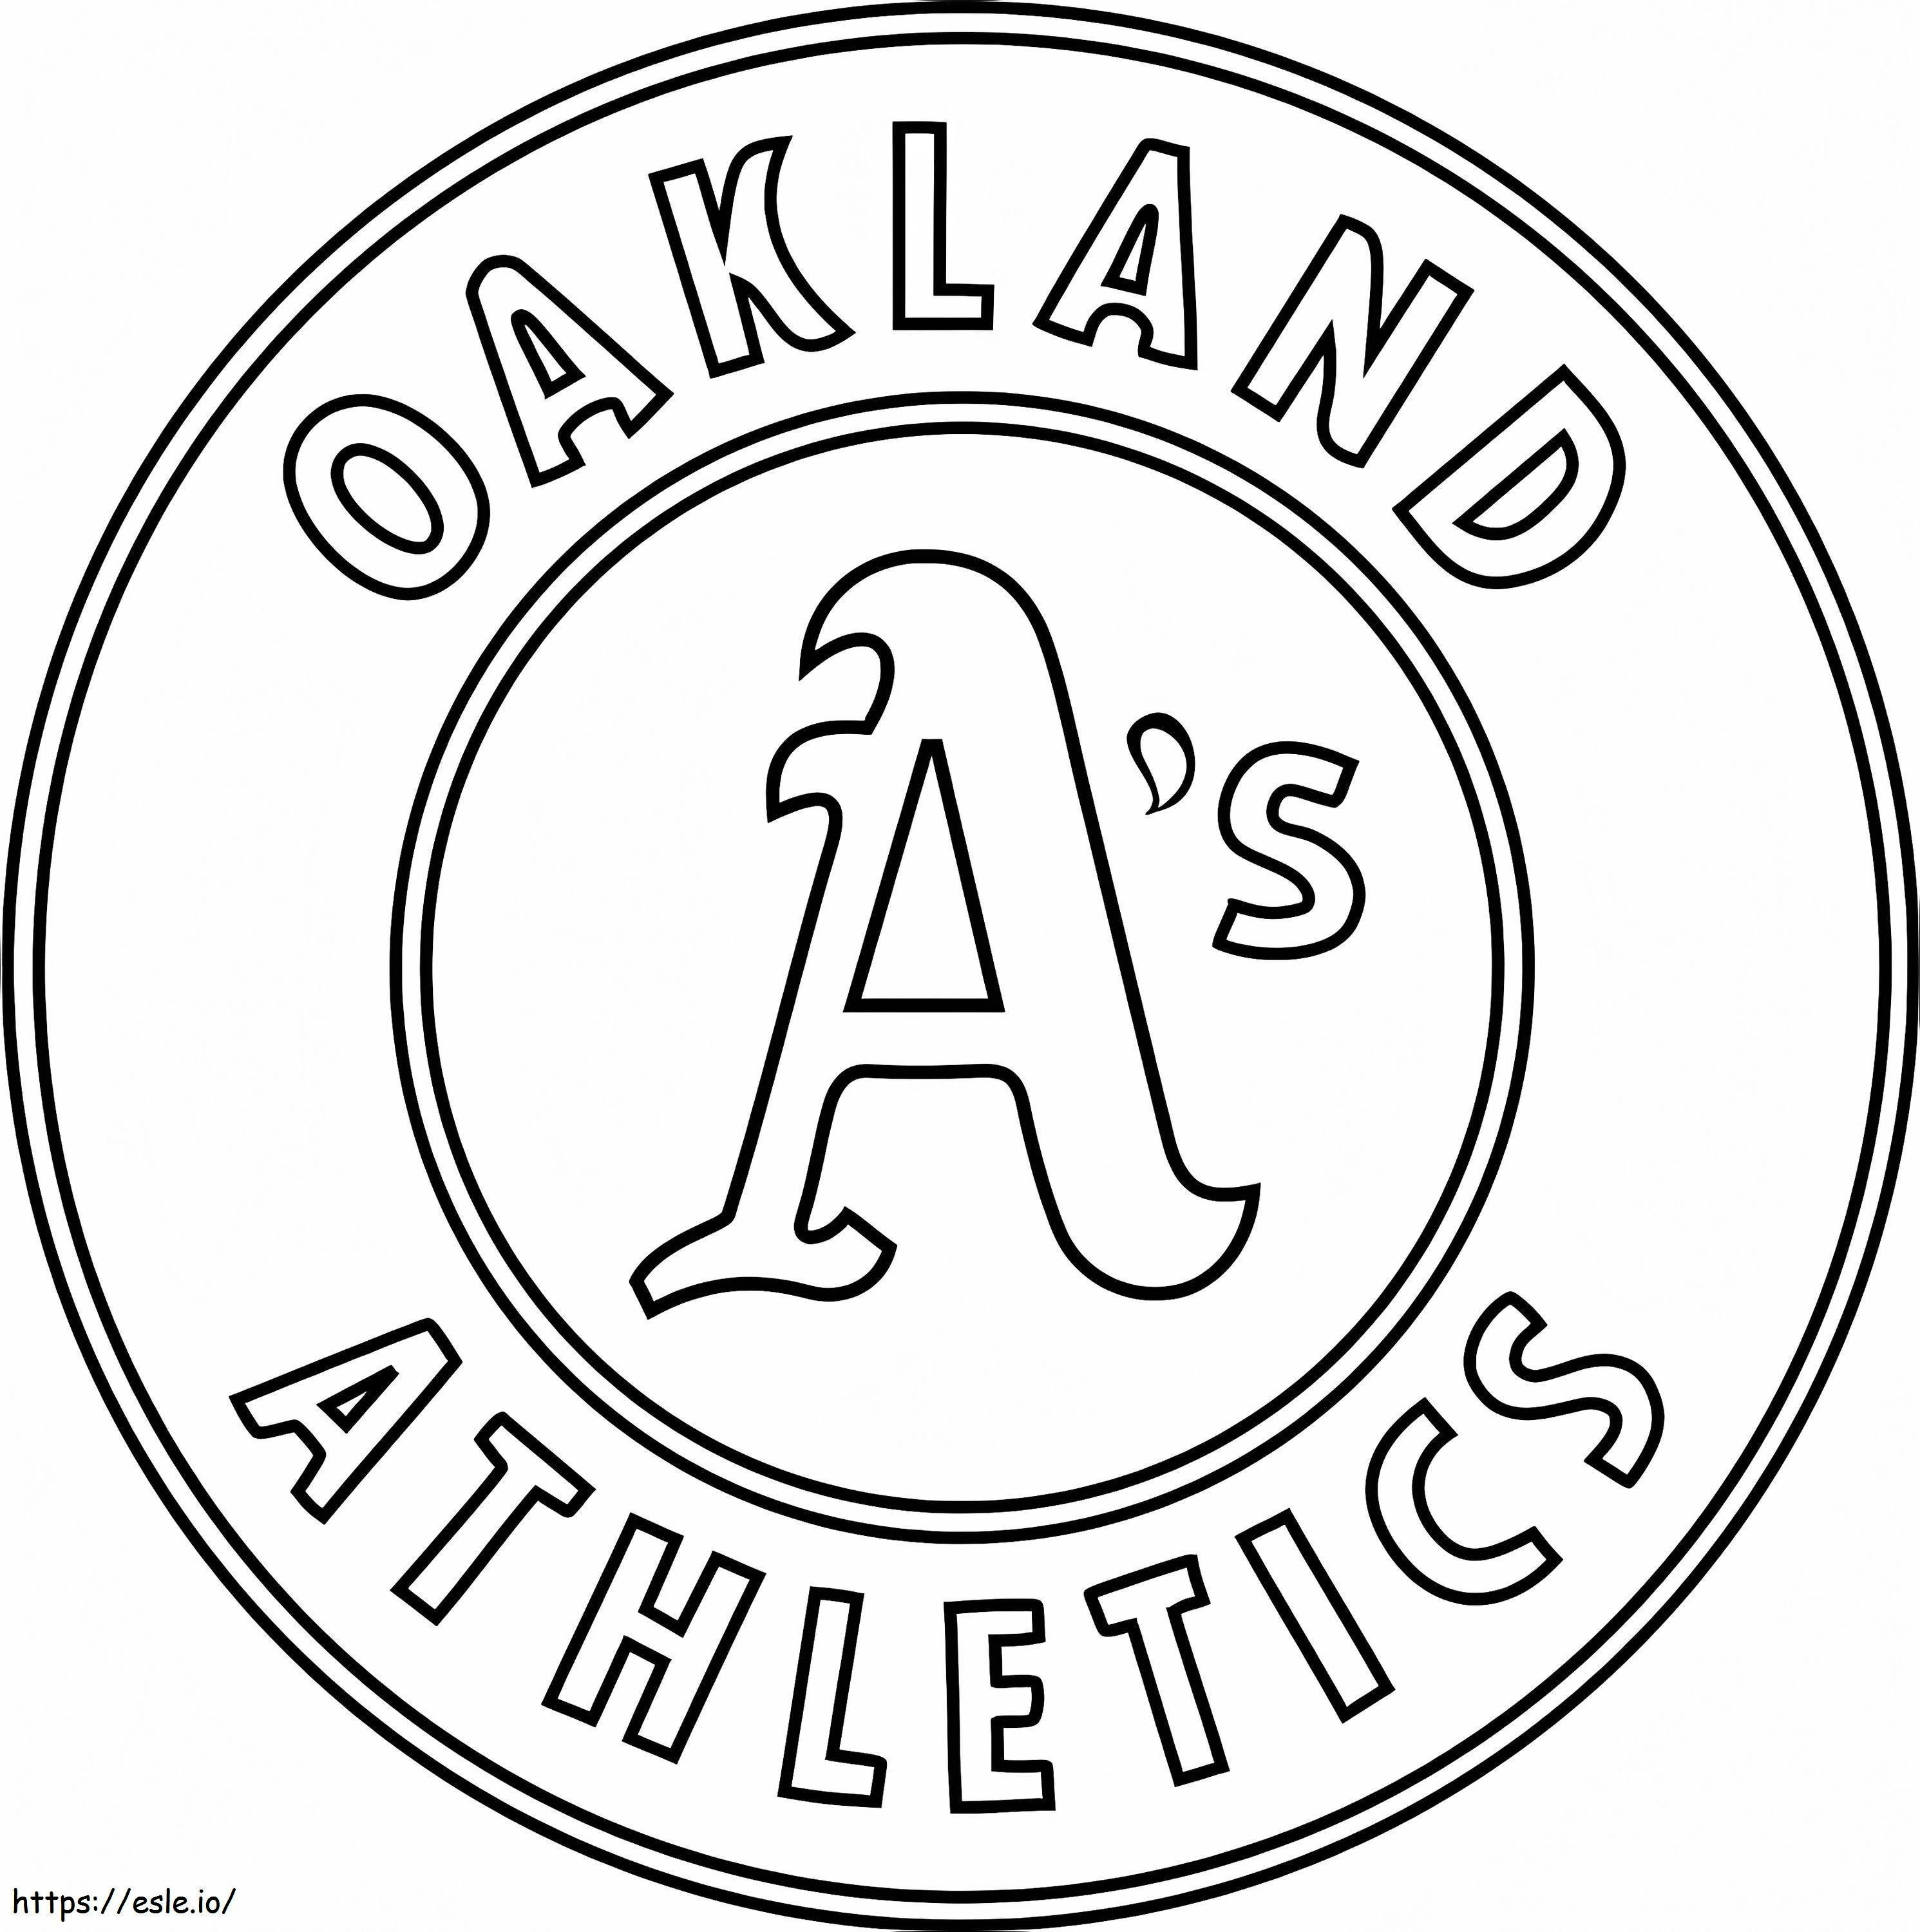 Logo Oakland Athletics de colorat